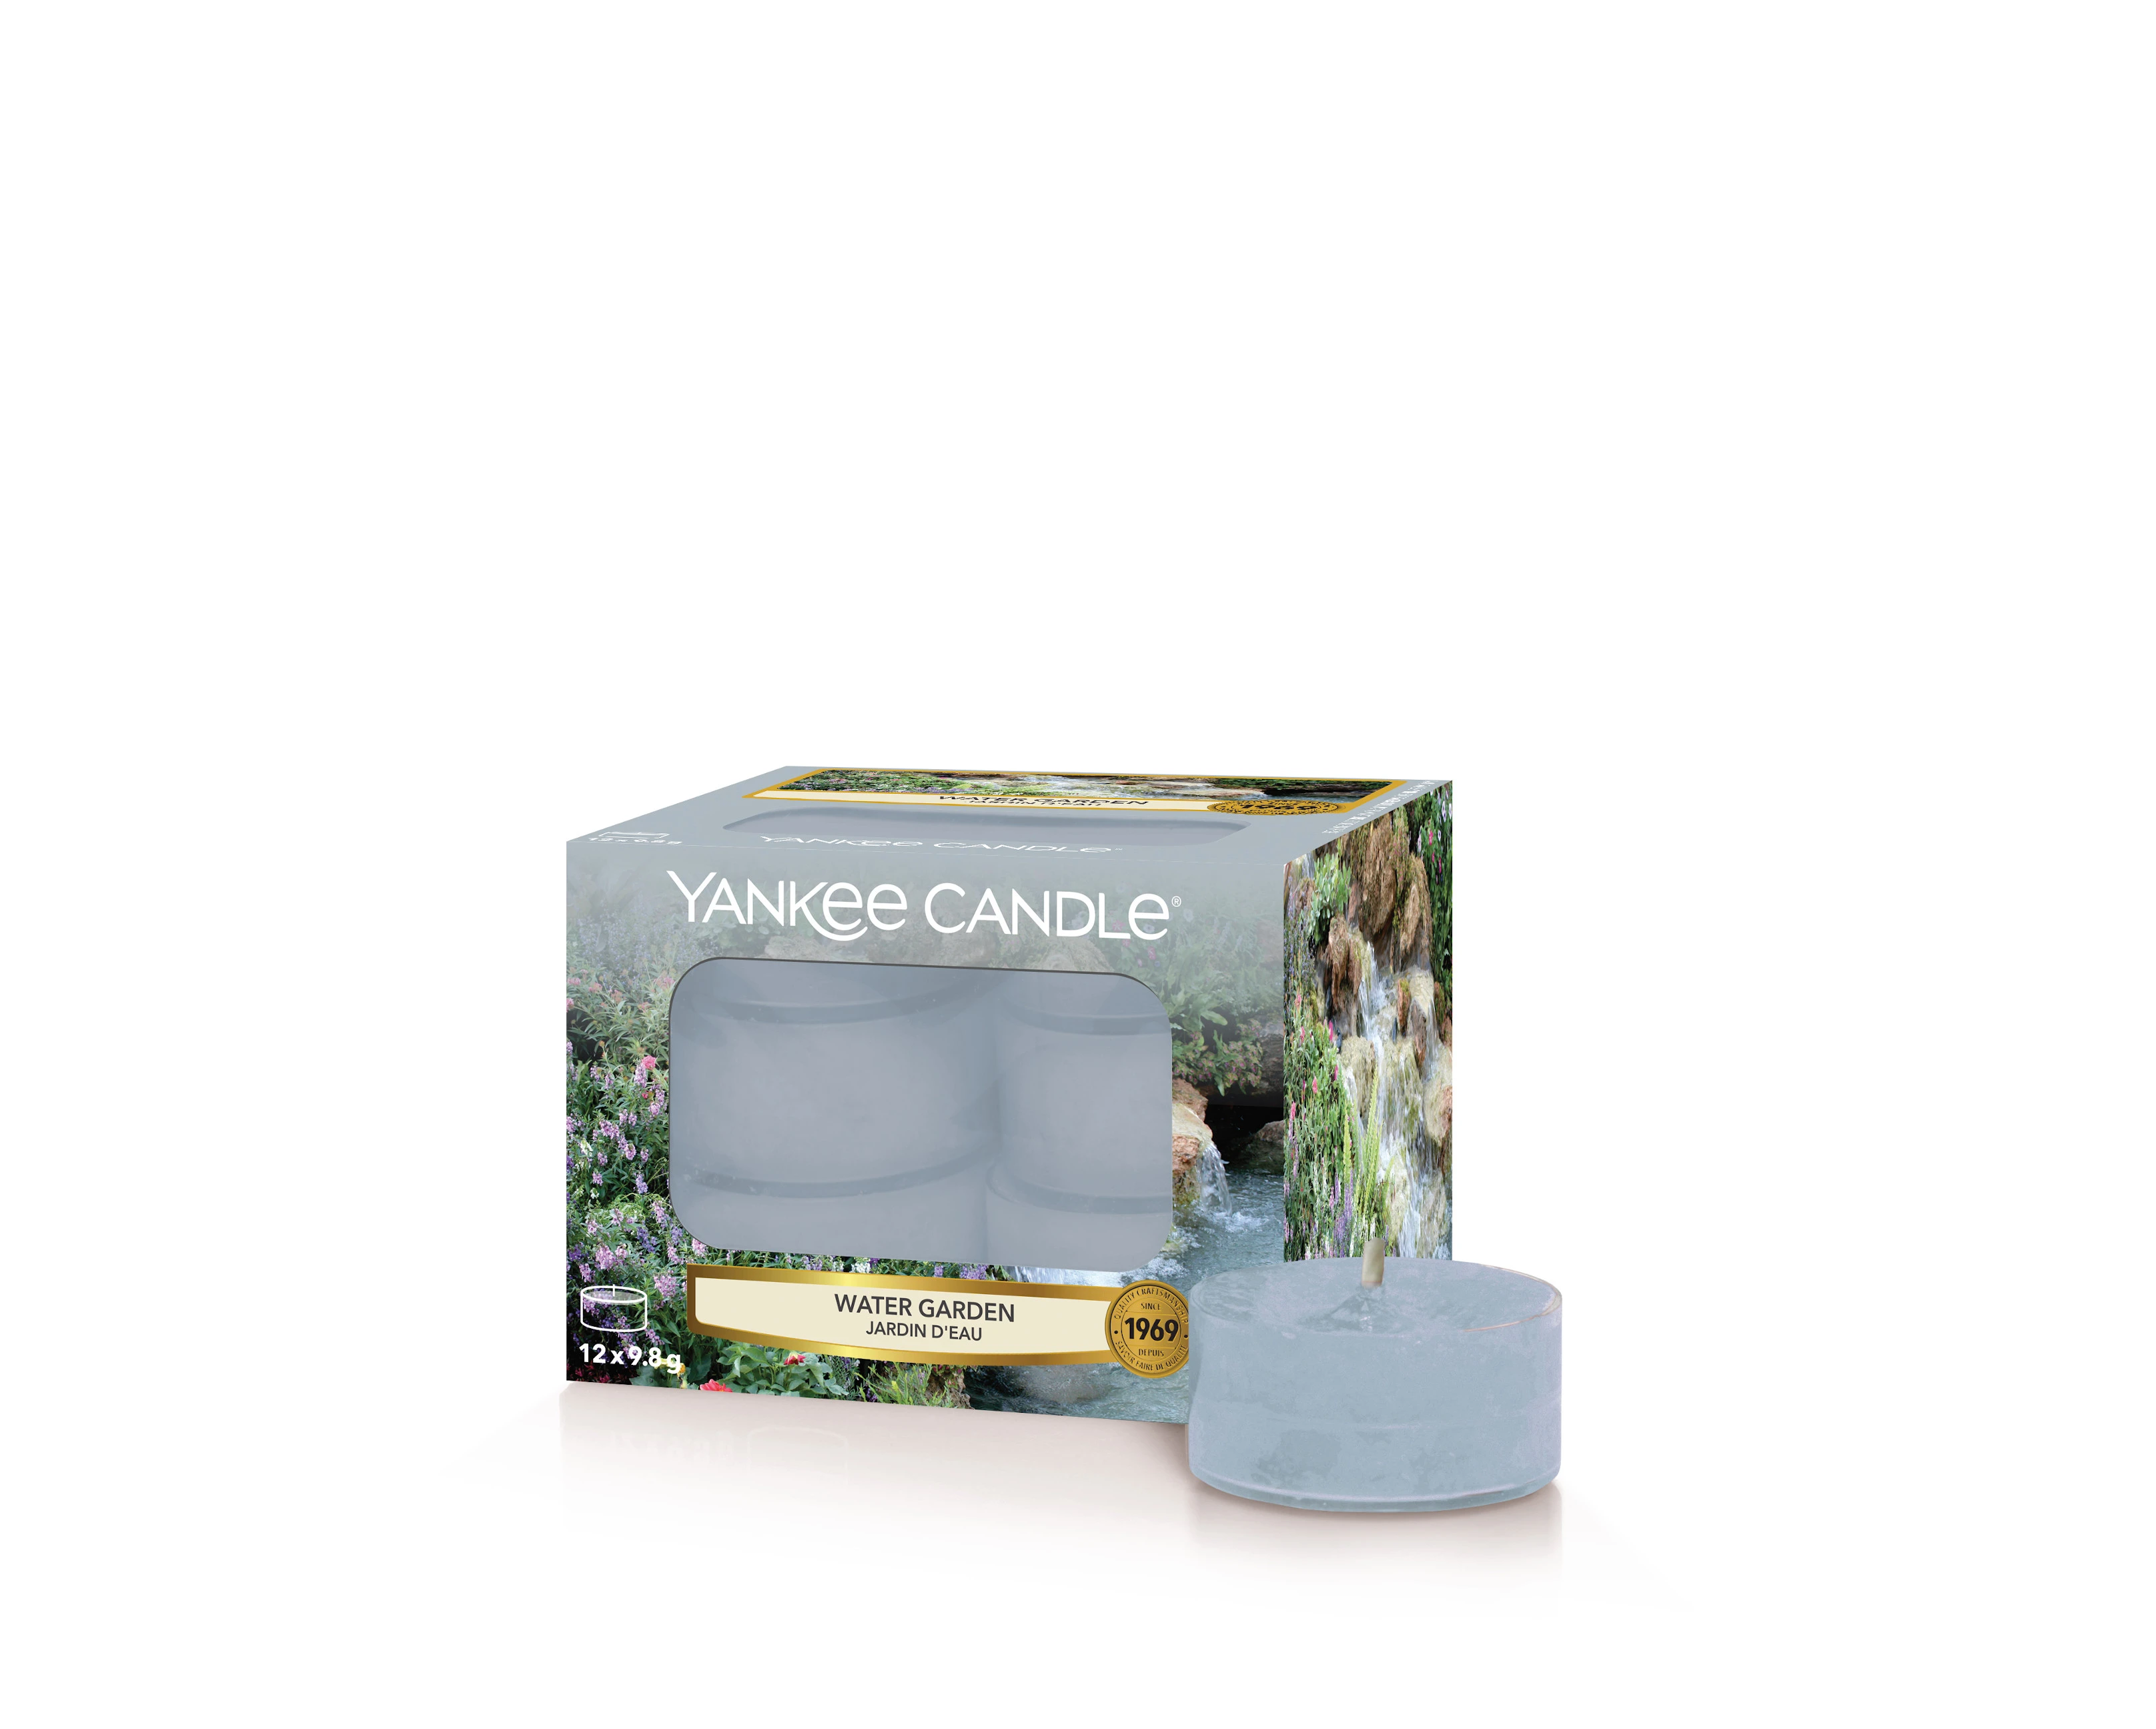 WATER GARDEN -Yankee Candle- Tea Light